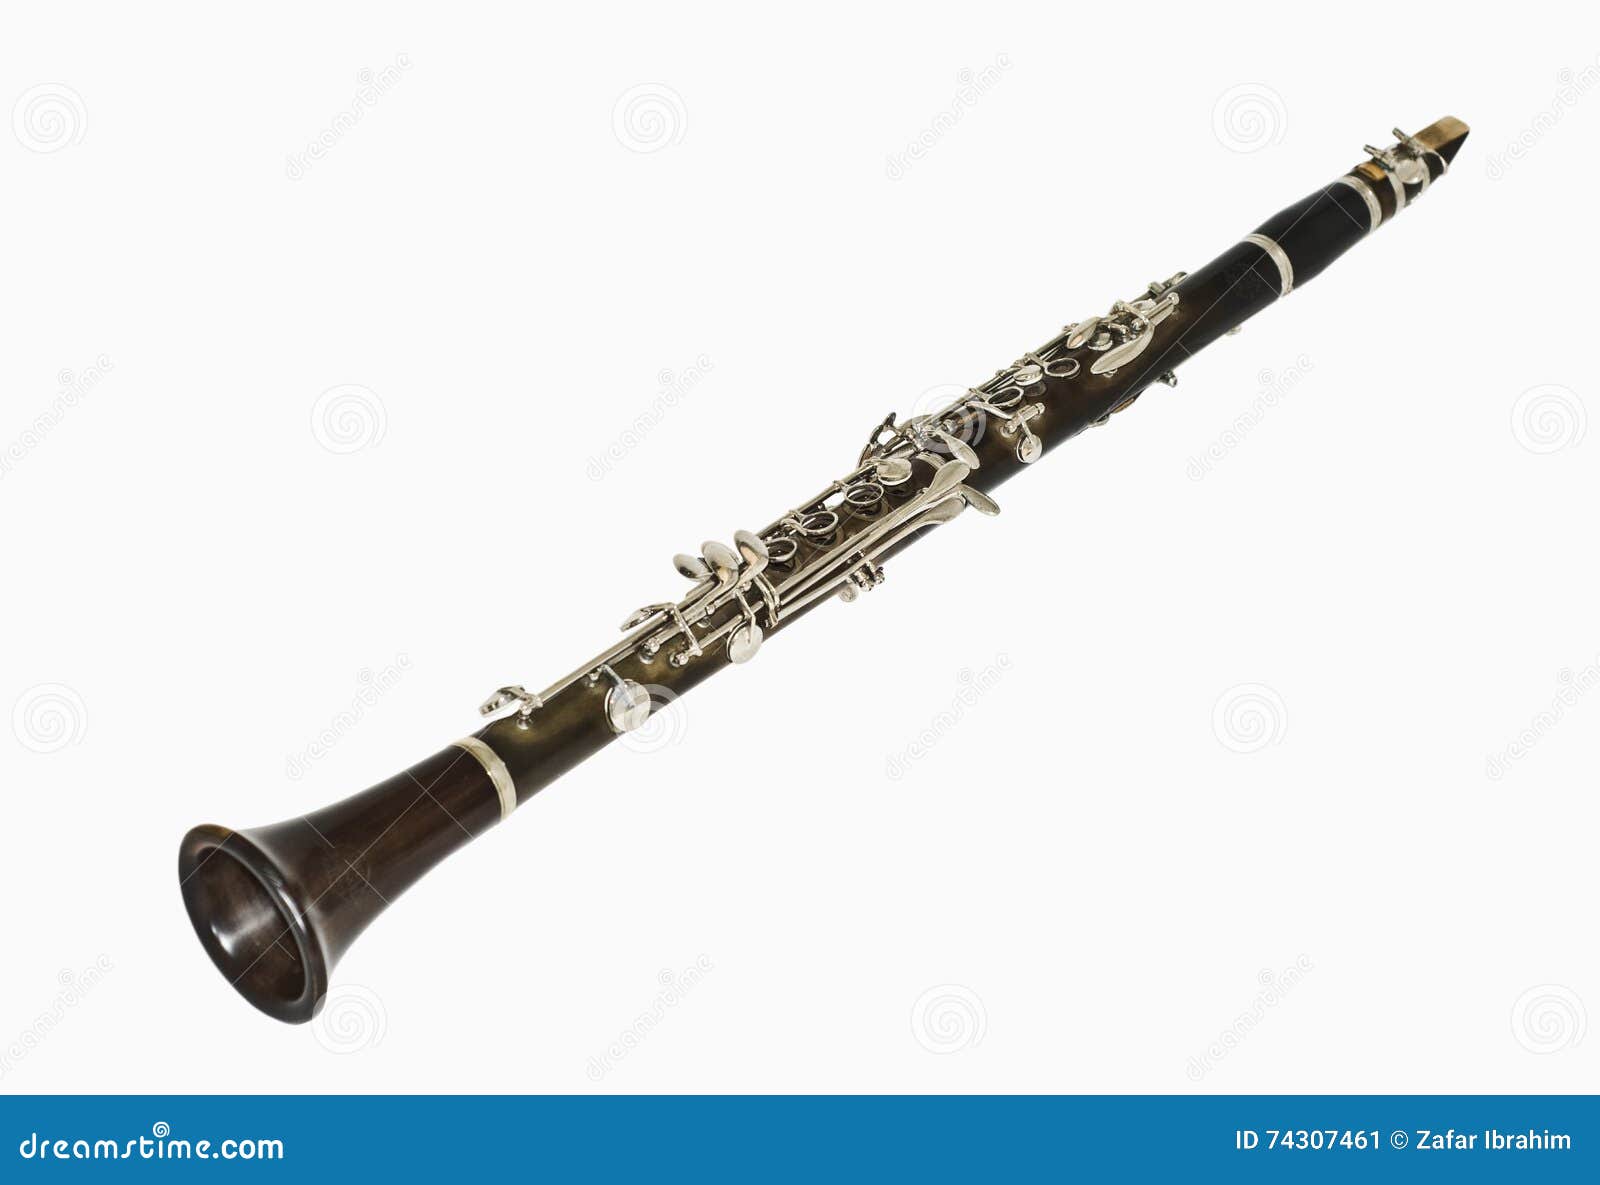 clarinet-stock-image-image-of-bluegrass-shape-peacock-74307461